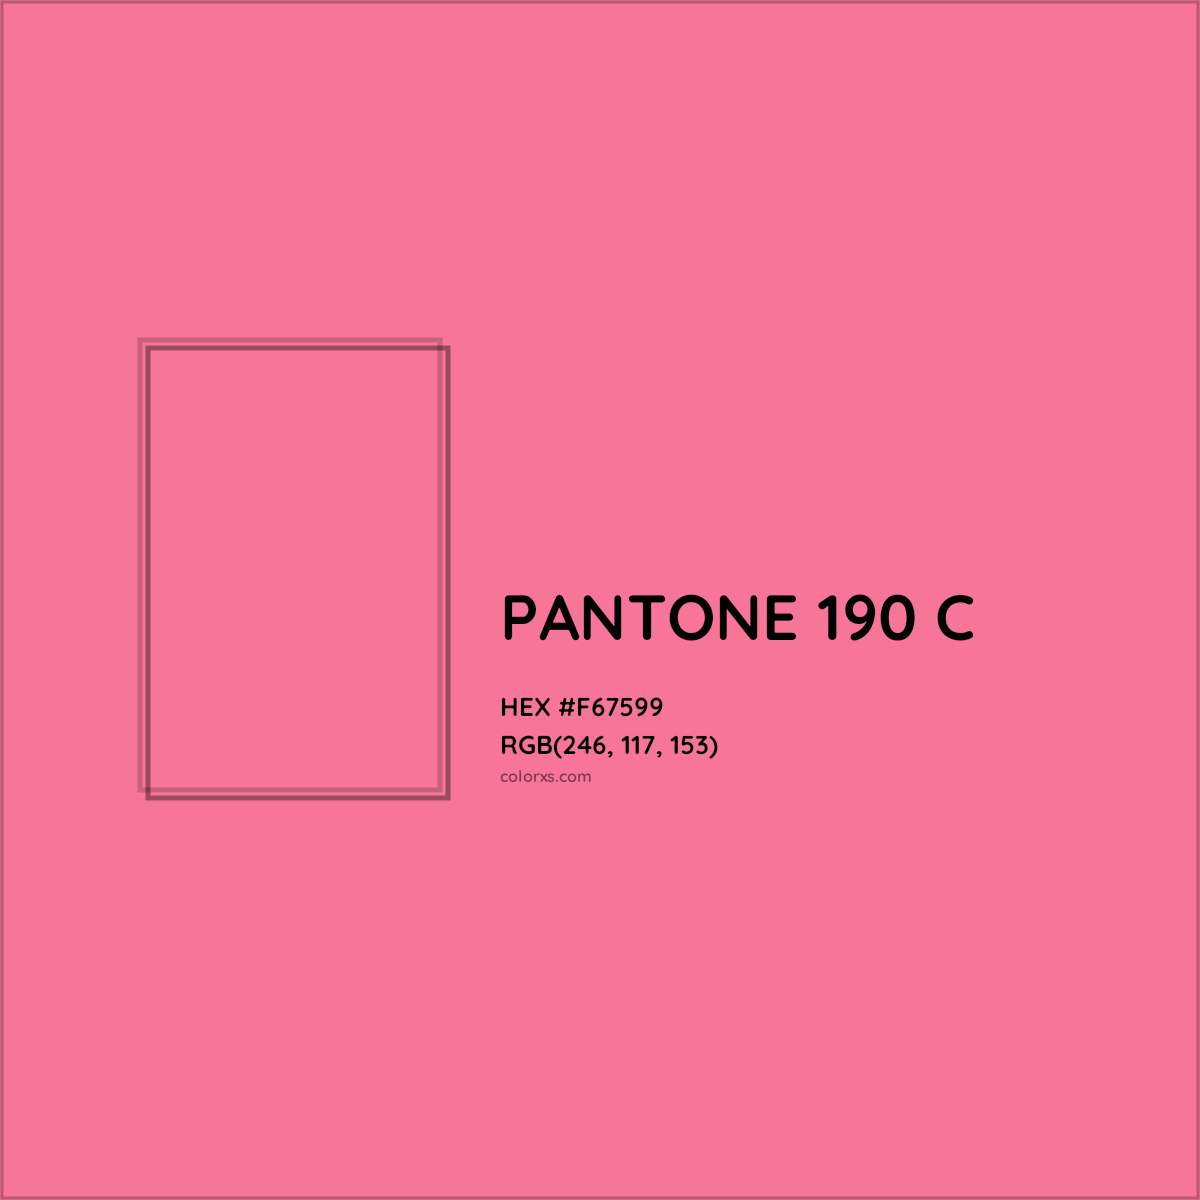 HEX #F67599 PANTONE 190 C CMS Pantone PMS - Color Code